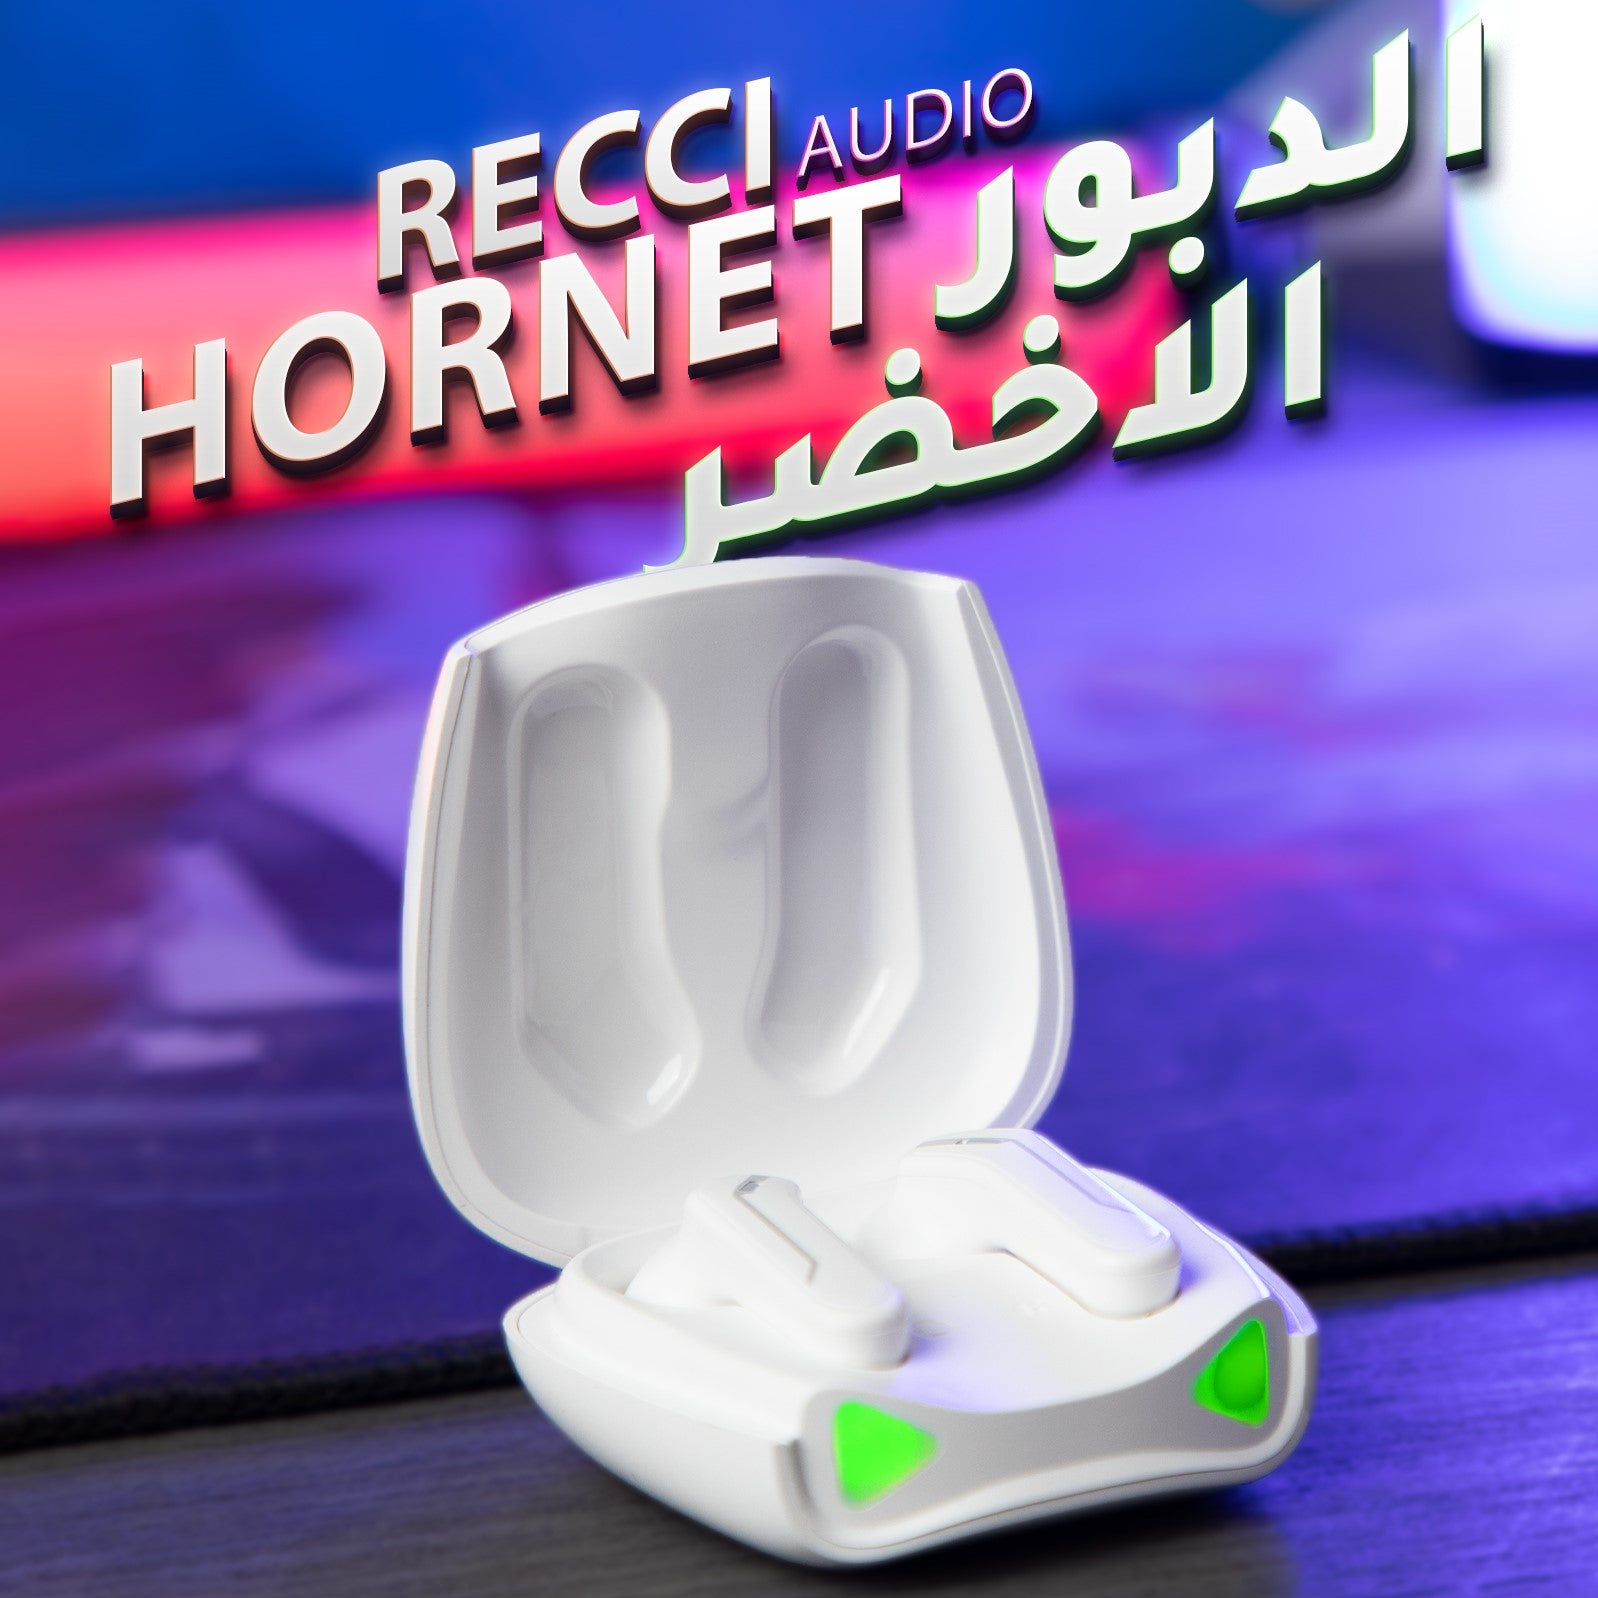 Recci Audio Hornet Wireless Earphone RT12